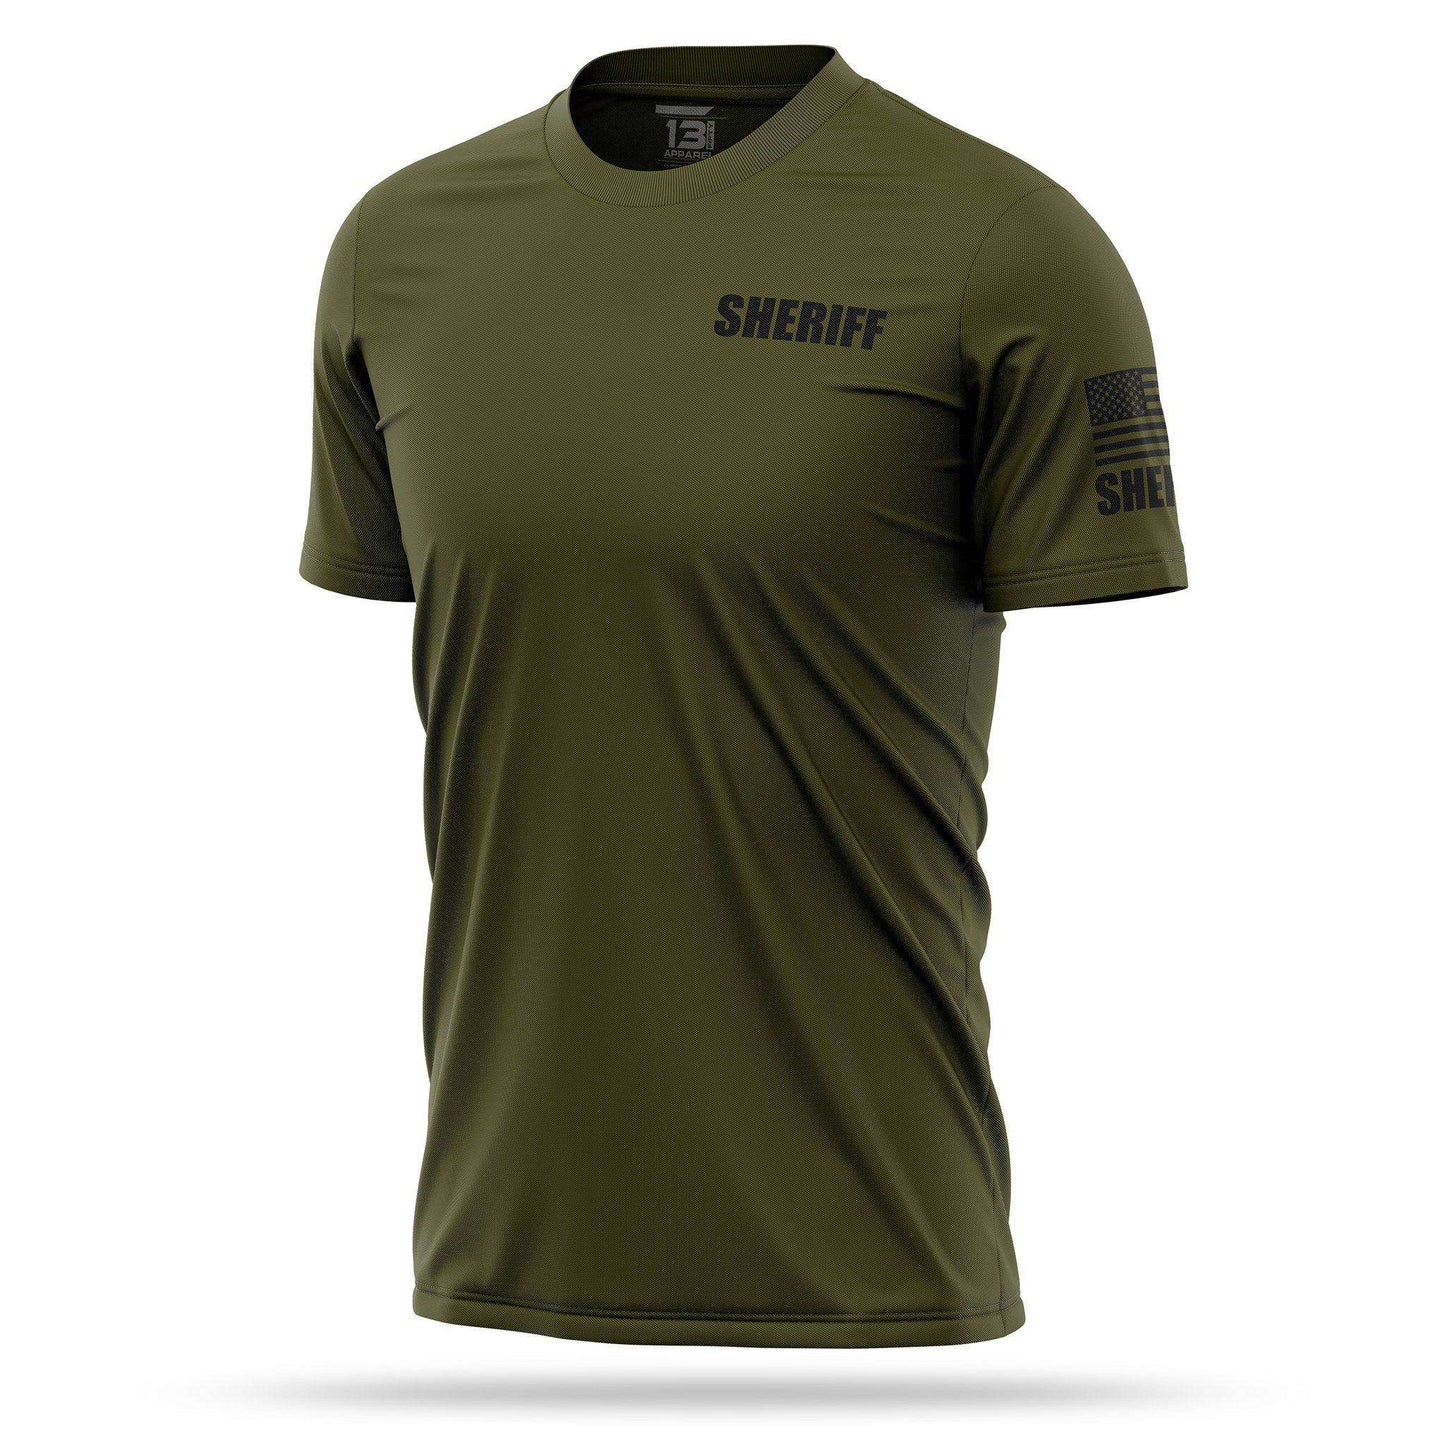 [SHERIFF] Men's Performance Shirt [GRN/BLK]-13 Fifty Apparel